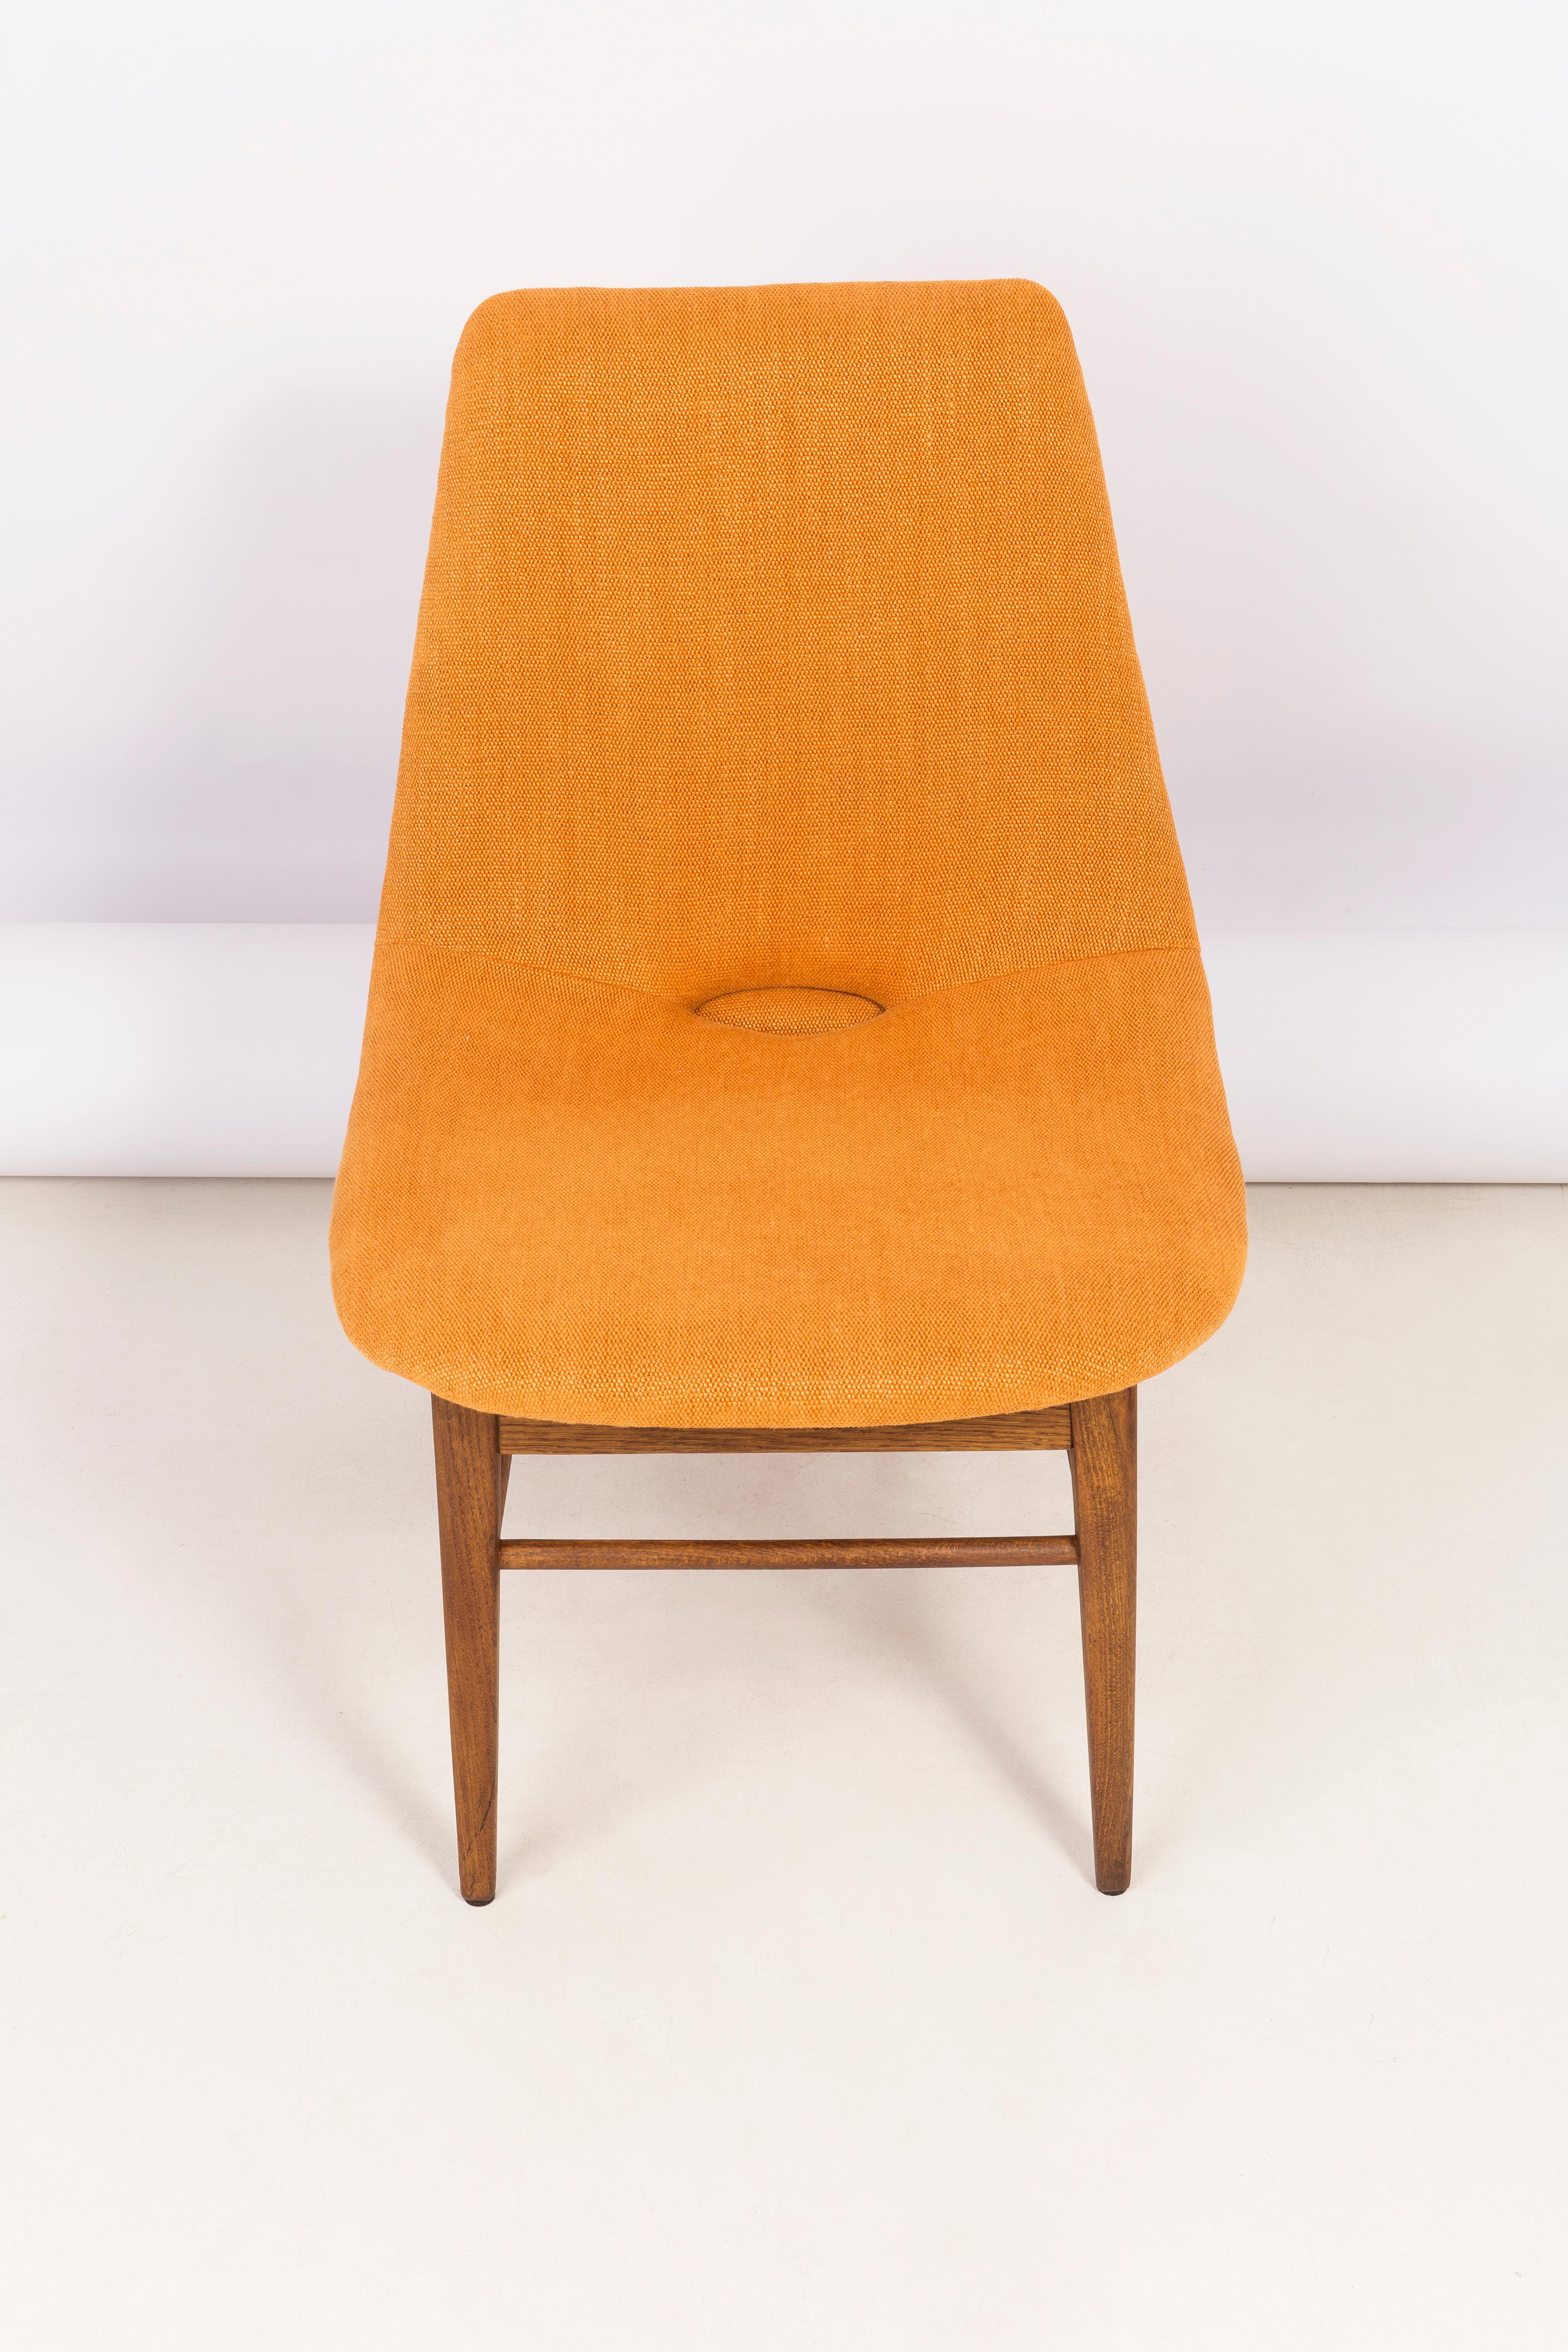 Rare 20th Century Orange Shell Chair, H.Lachert, 1960s For Sale 5